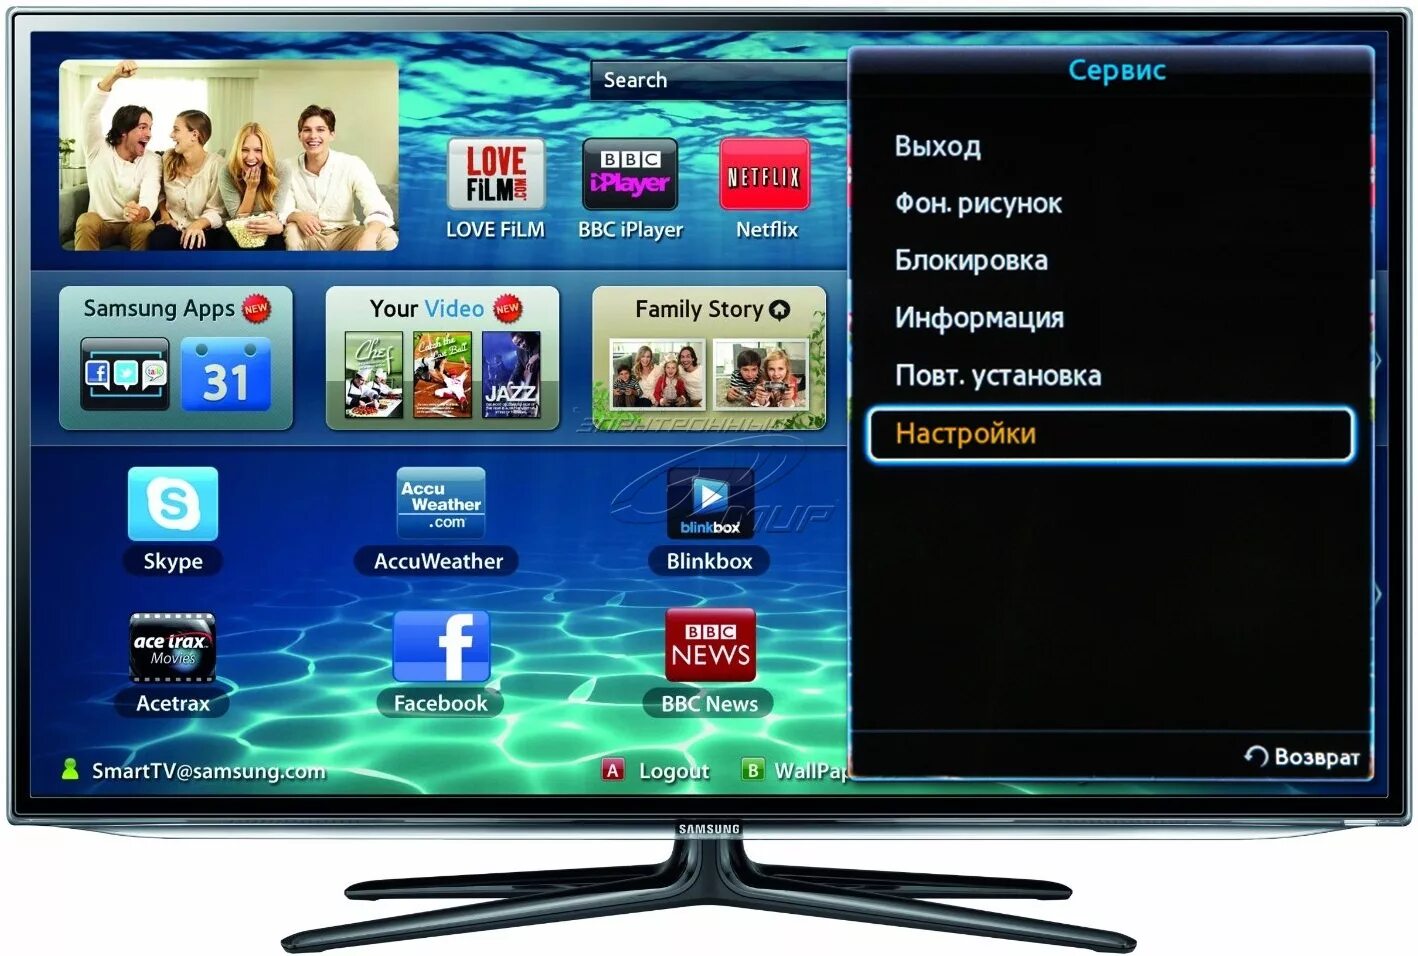 Как настроить смарт телевизор Samsung. Телевизор самсунг смарт ТВ. Samsung TV DLNA. Как настроить смарт ТВ на телевизоре самсунг.